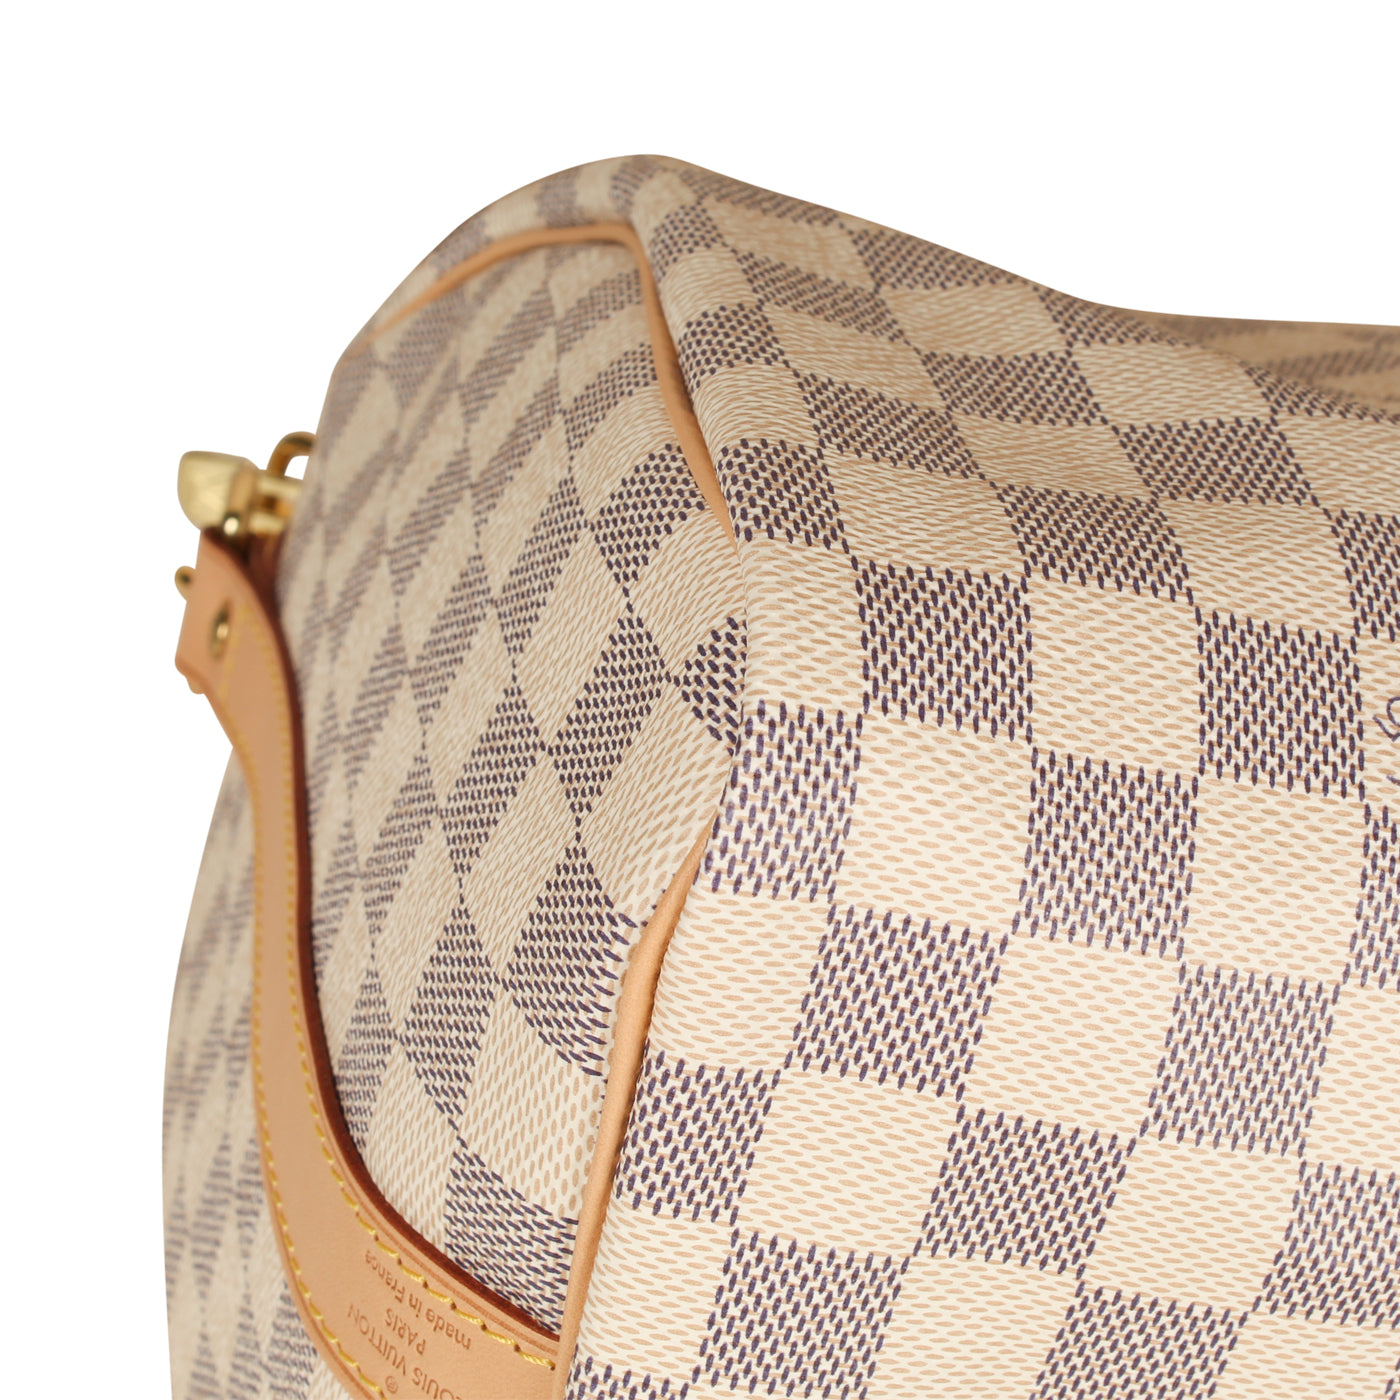 2019 RECEIPT Louis Vuitton Damier Azur Bandouliere Speedy 30 STRAP Bag  $1890+TAX